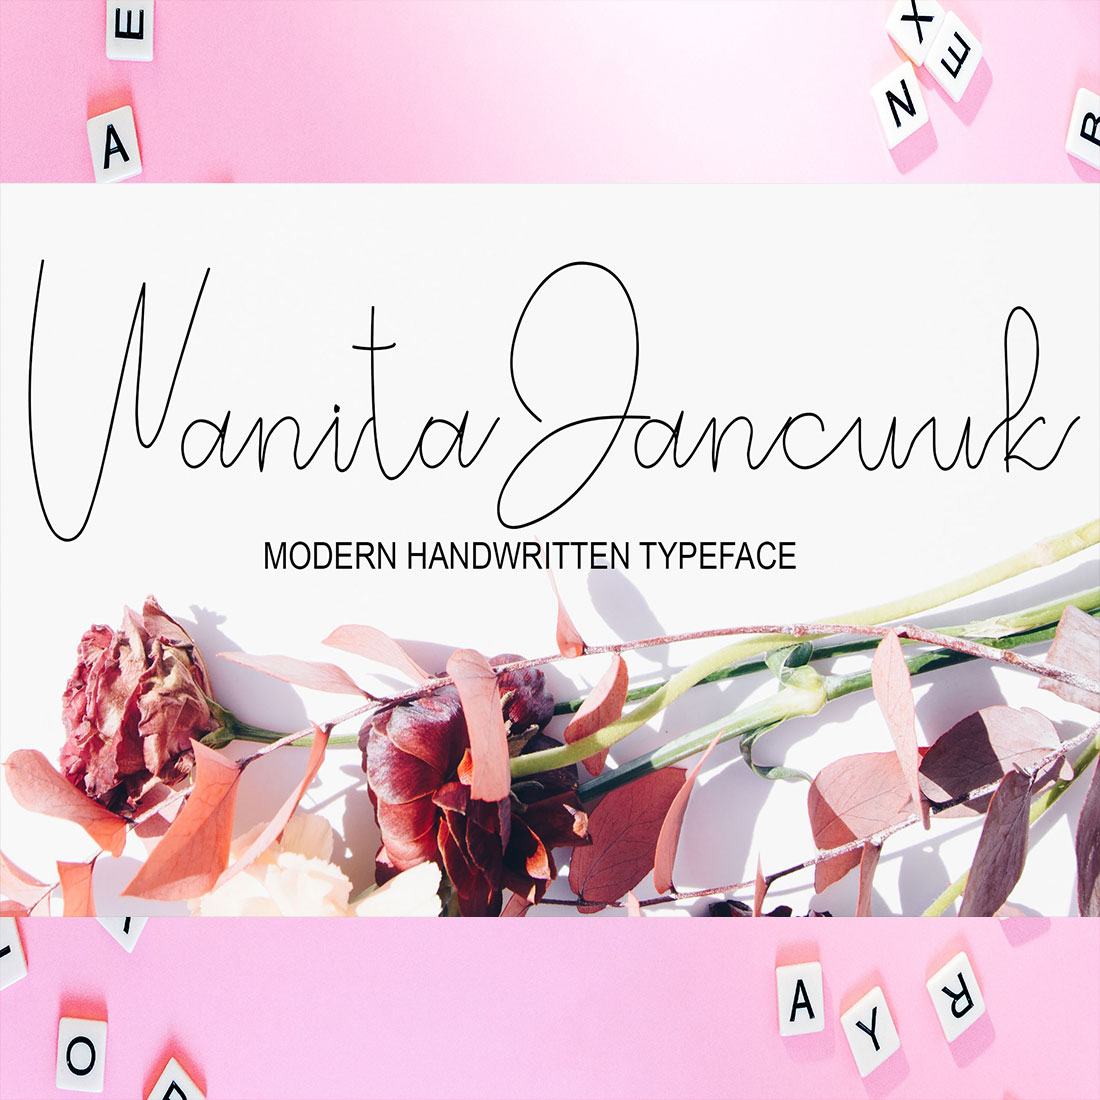 Wanita Jancuuk adorable font cover.